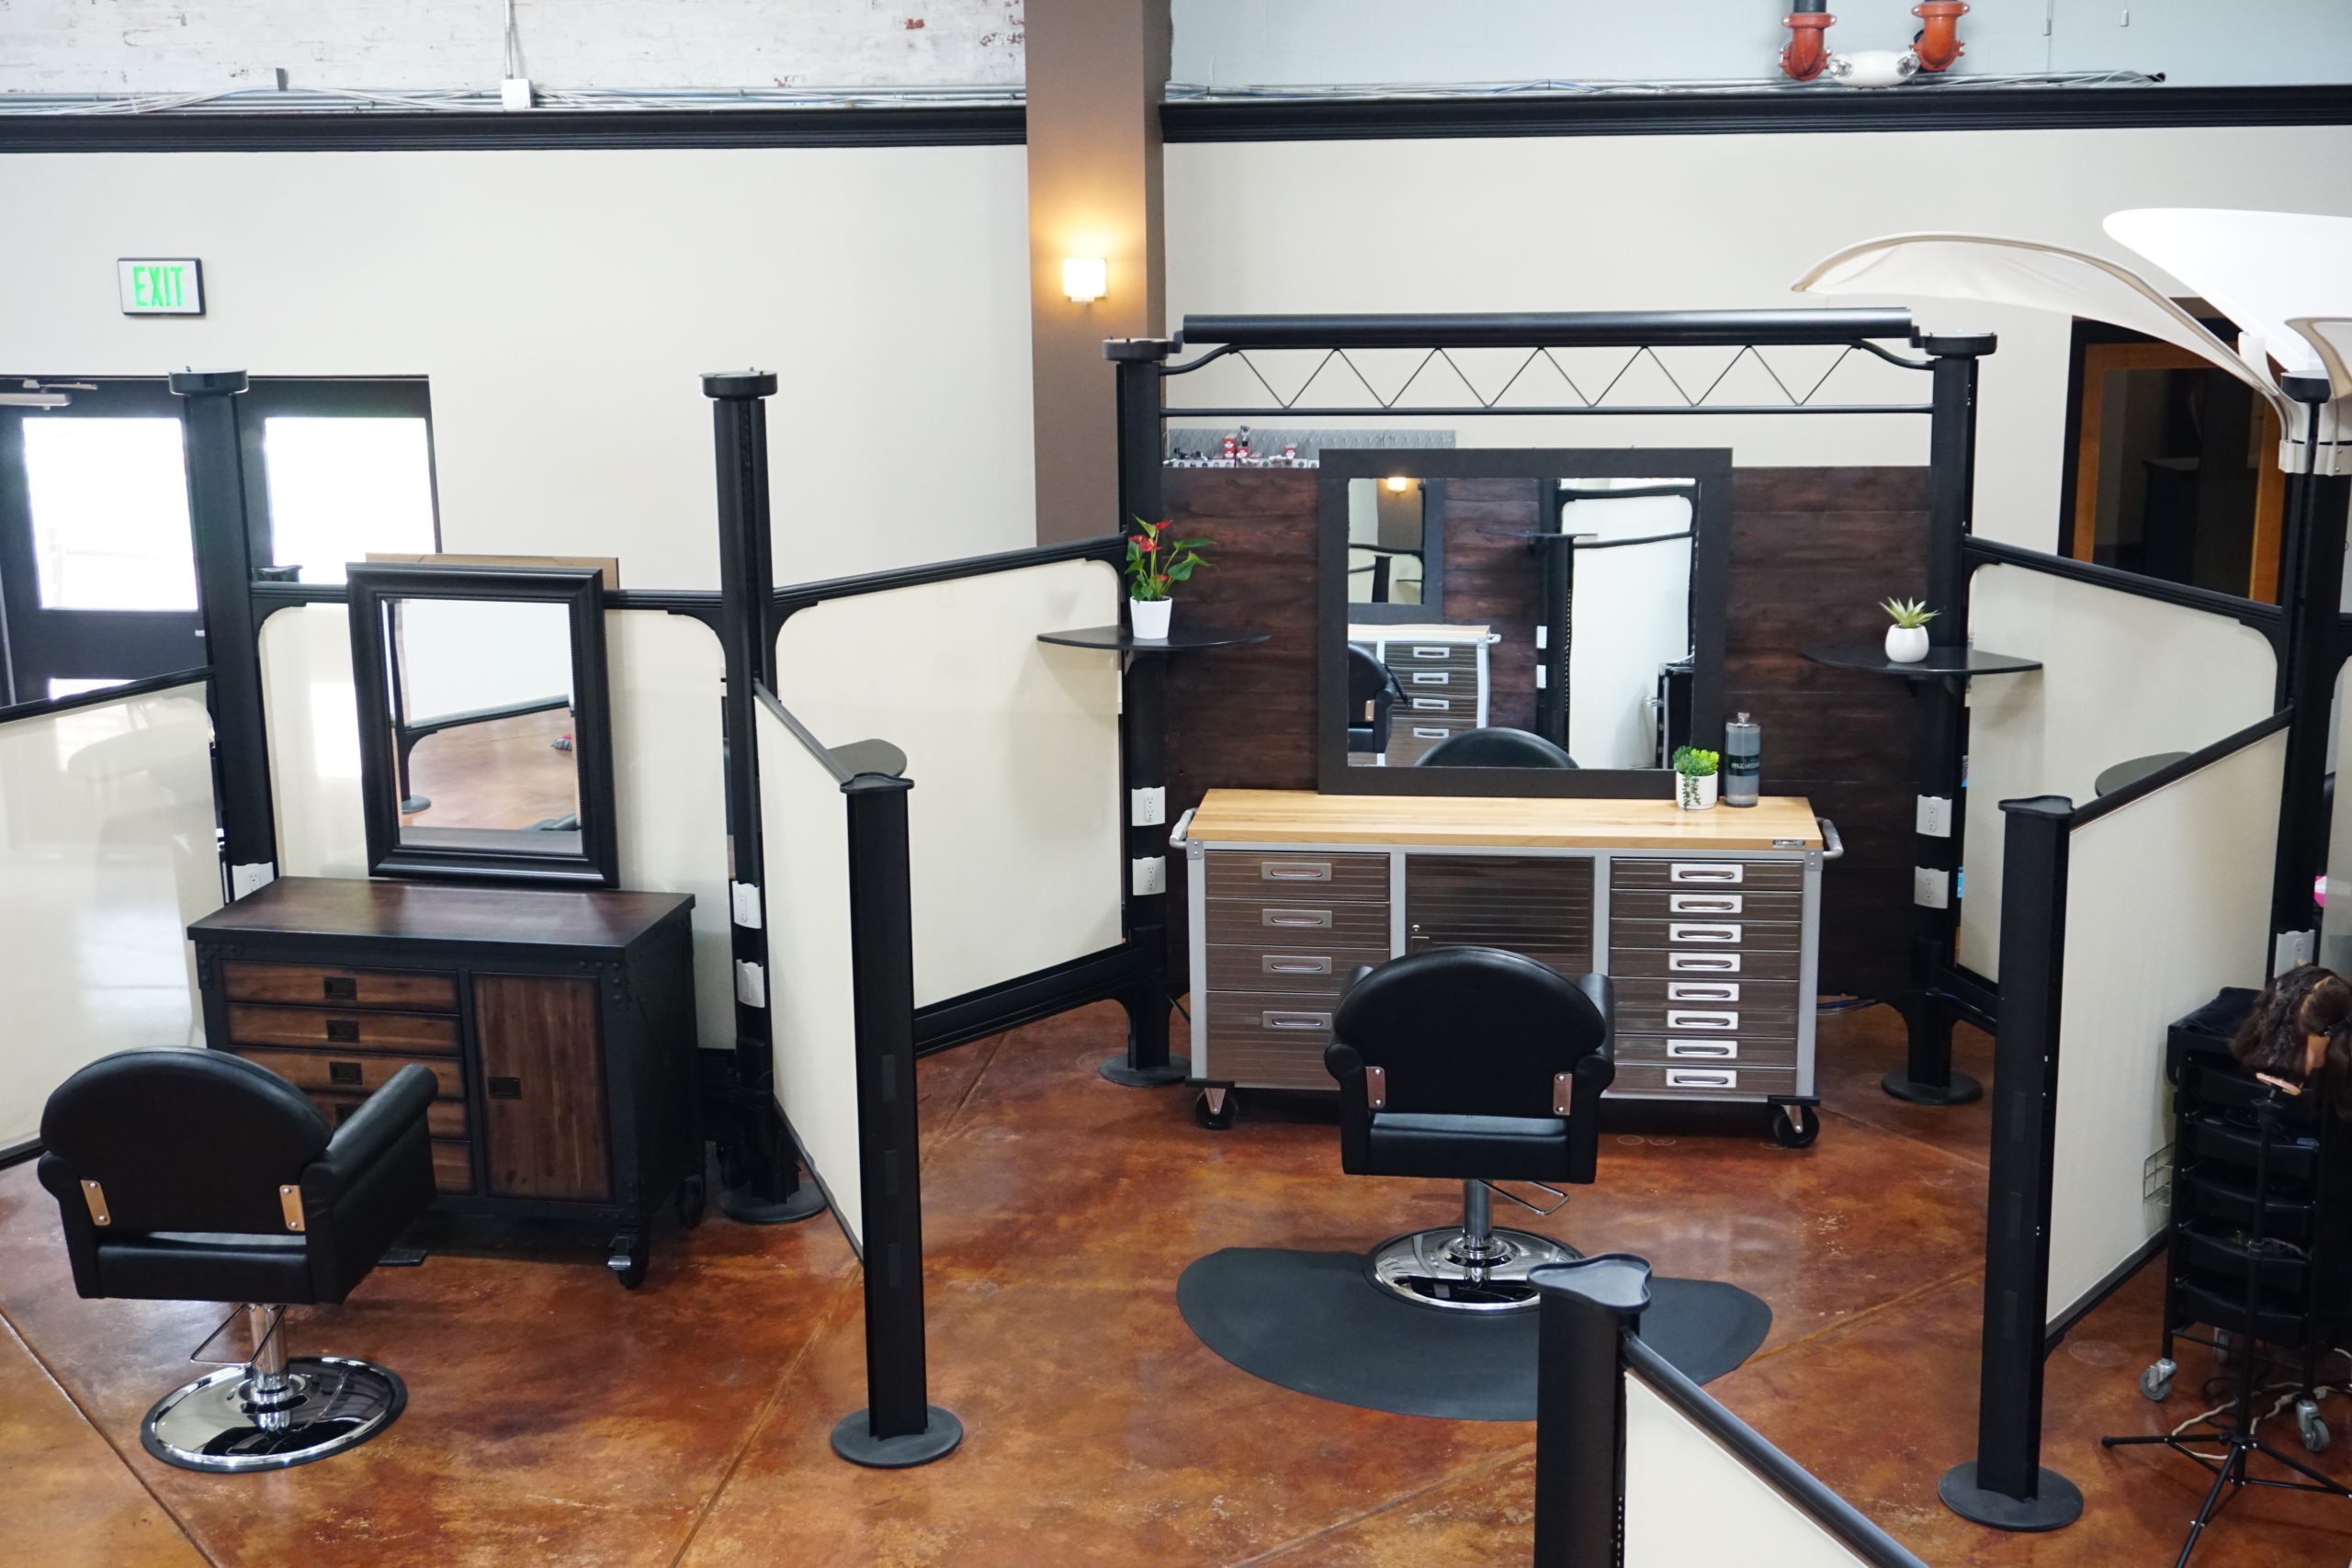 A further view of signature salon pro's beauty salon station.